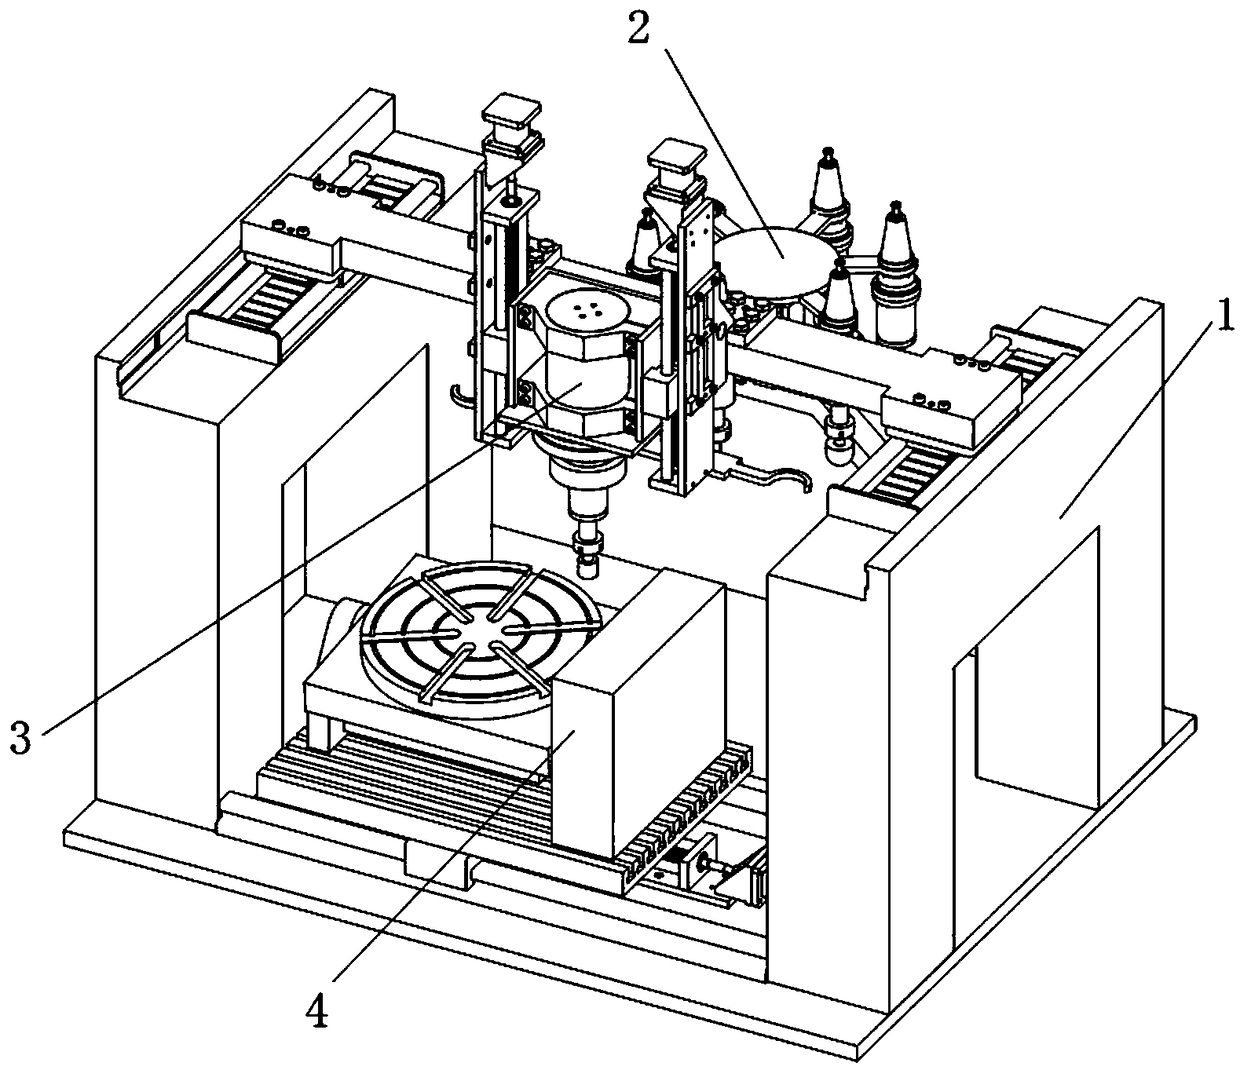 A high-speed, high-precision five-axis ultrasonic machining machine tool